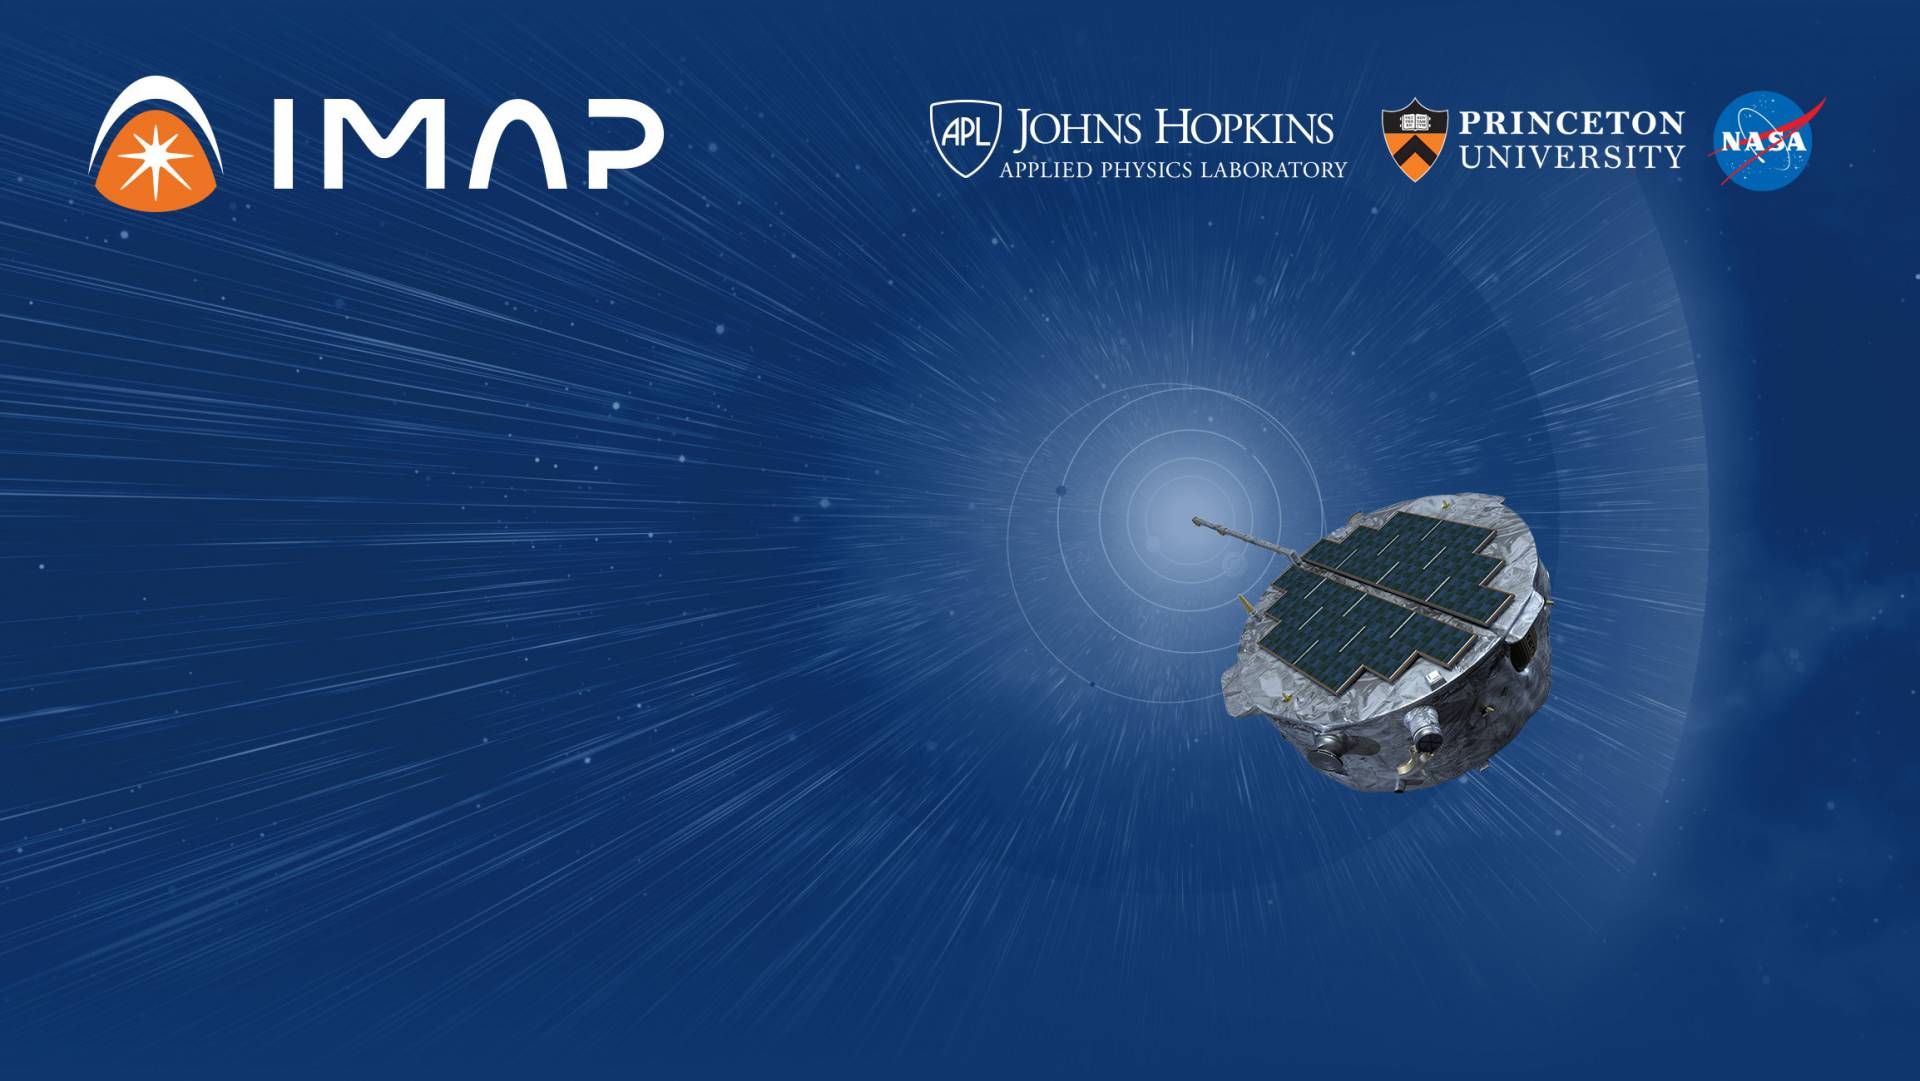 Space vehicle with IMAP, Johns Hopkins Applied Physic Laboratory, Princeton University, NASA logos superimposed